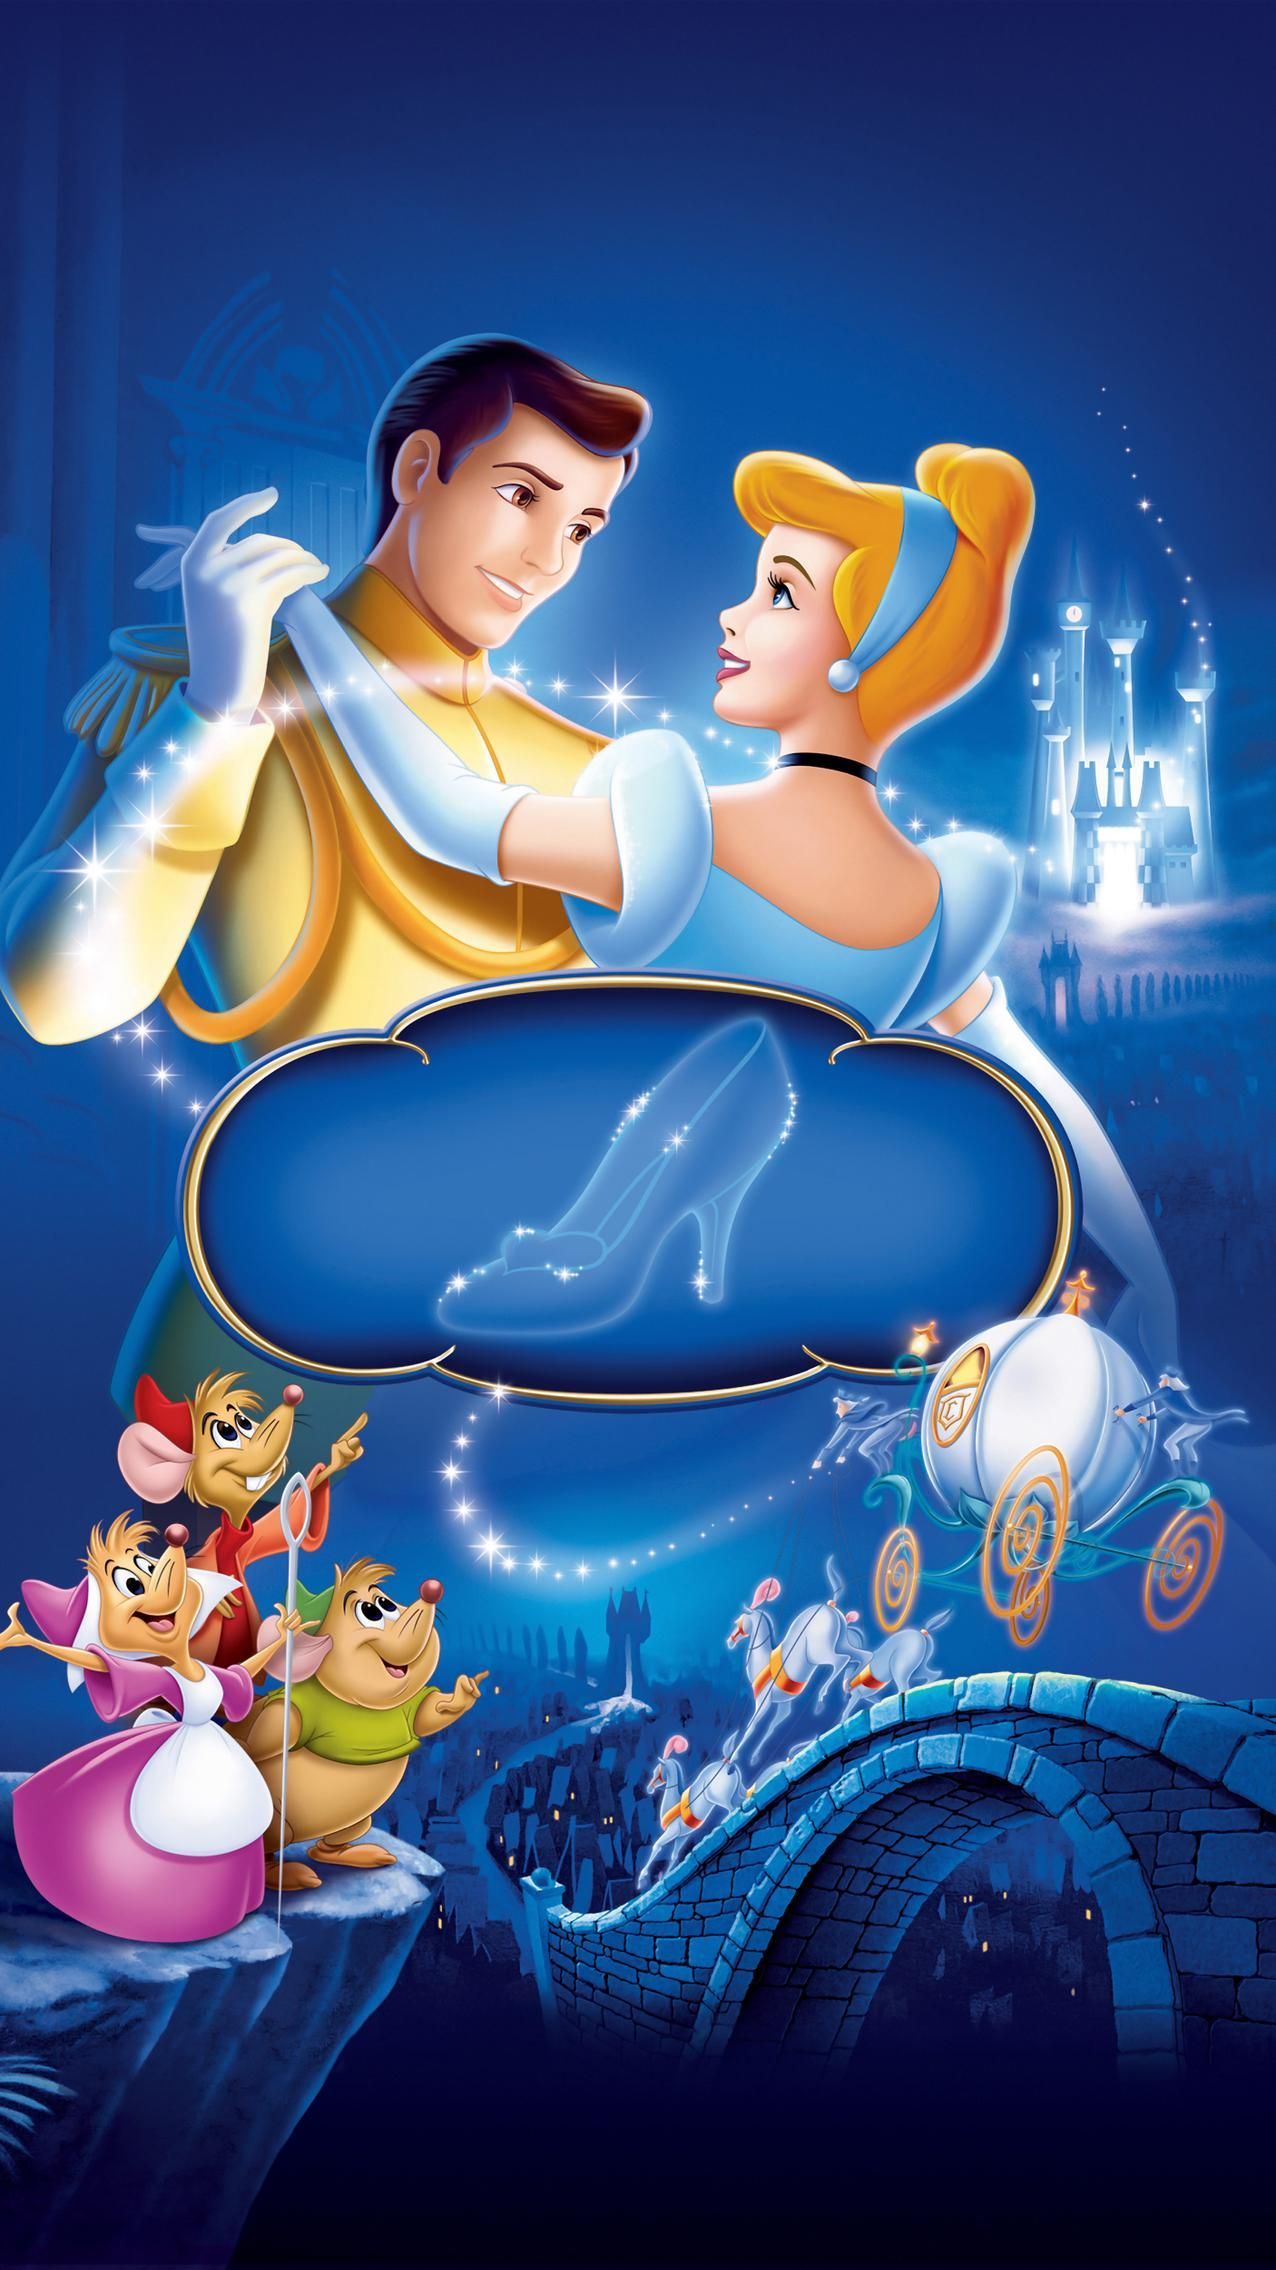 16 Facts About Cinderella (Disney's Cinderella) 